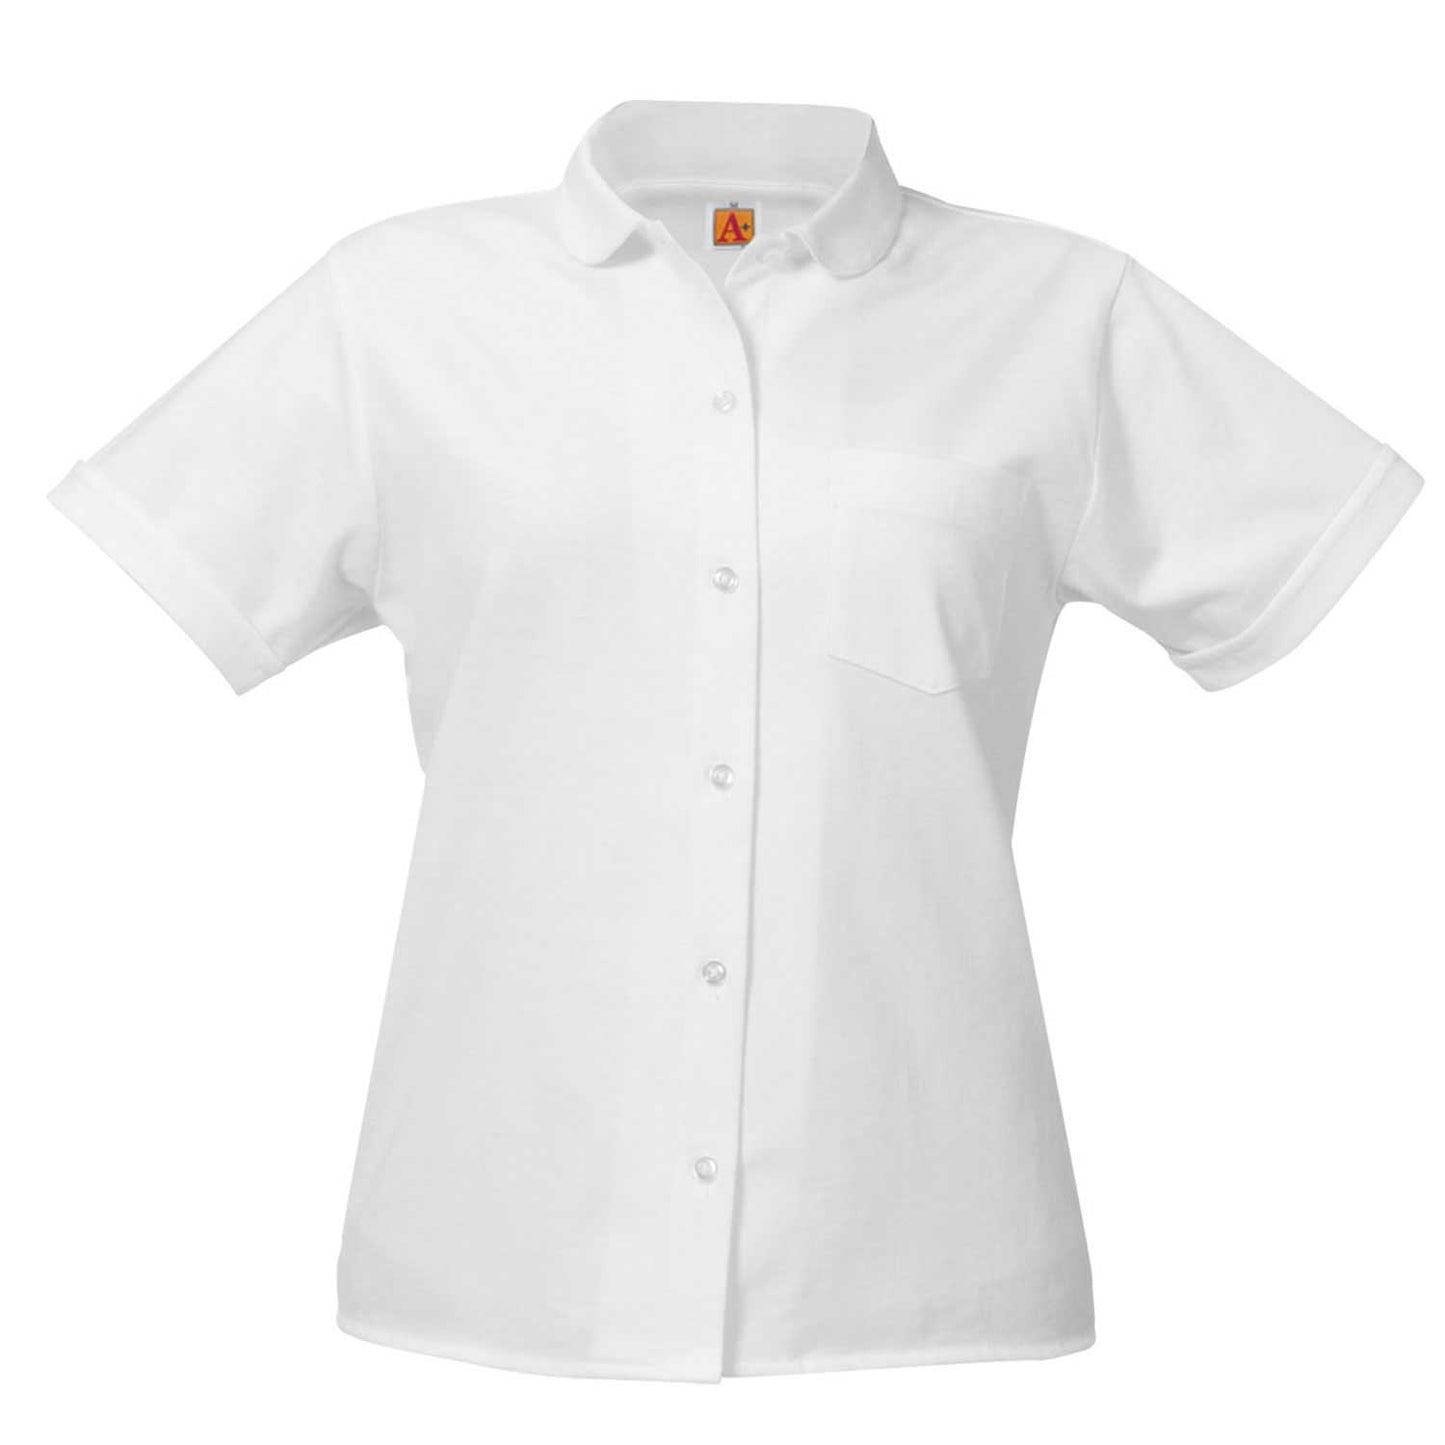 Jersey Knit Short Sleeve Shirt (Female) - 1105